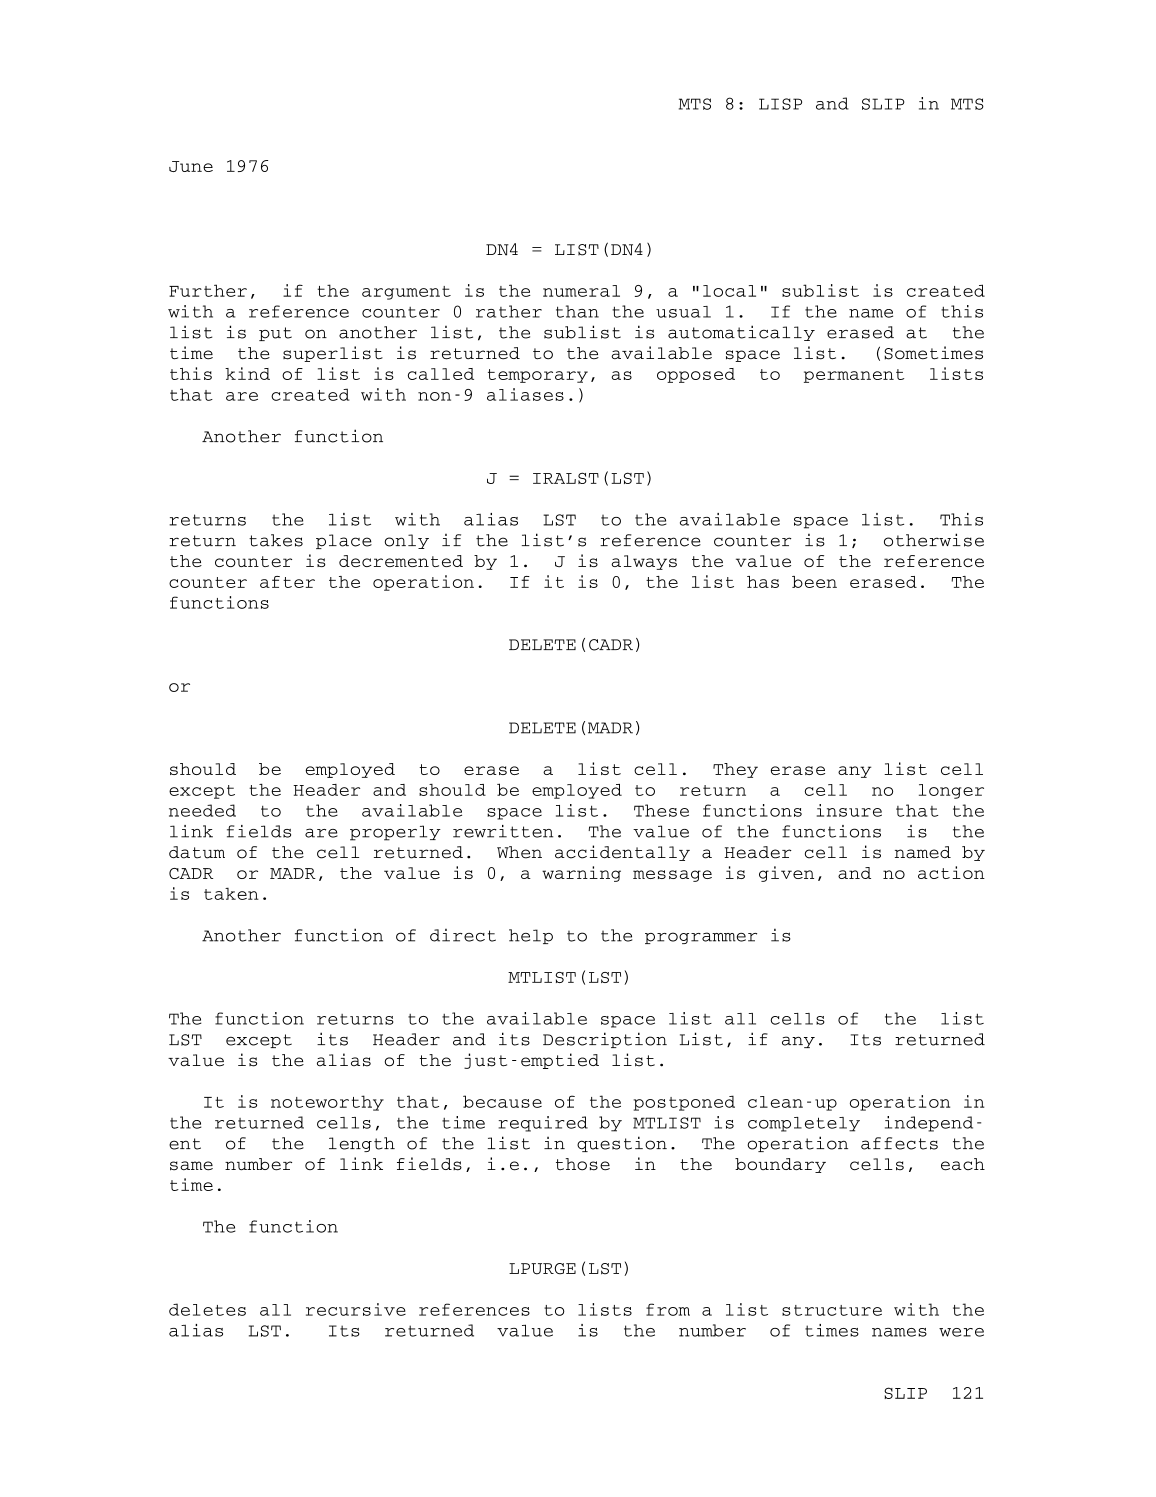 MTS Volume 8 - LISP and SLIP page 120